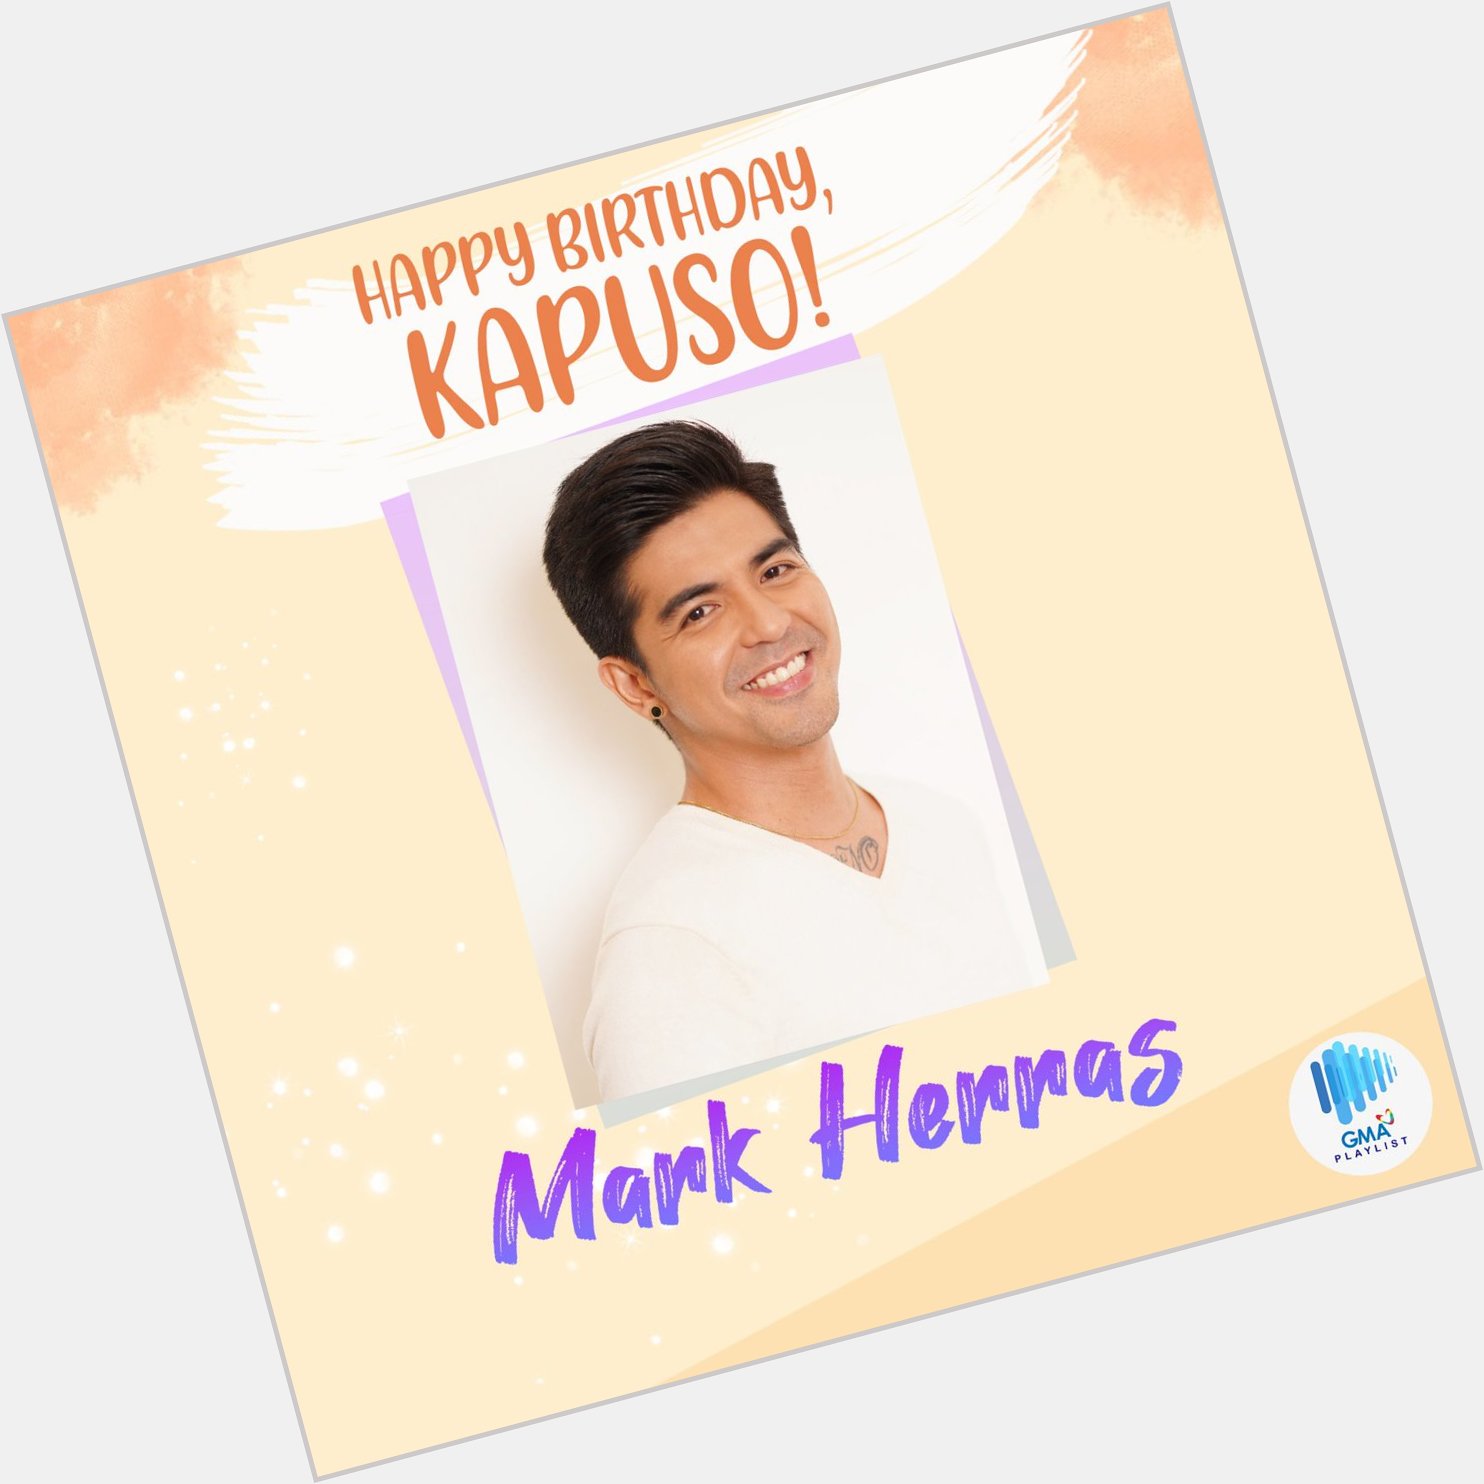 Happy birthday, Mark Herras! 